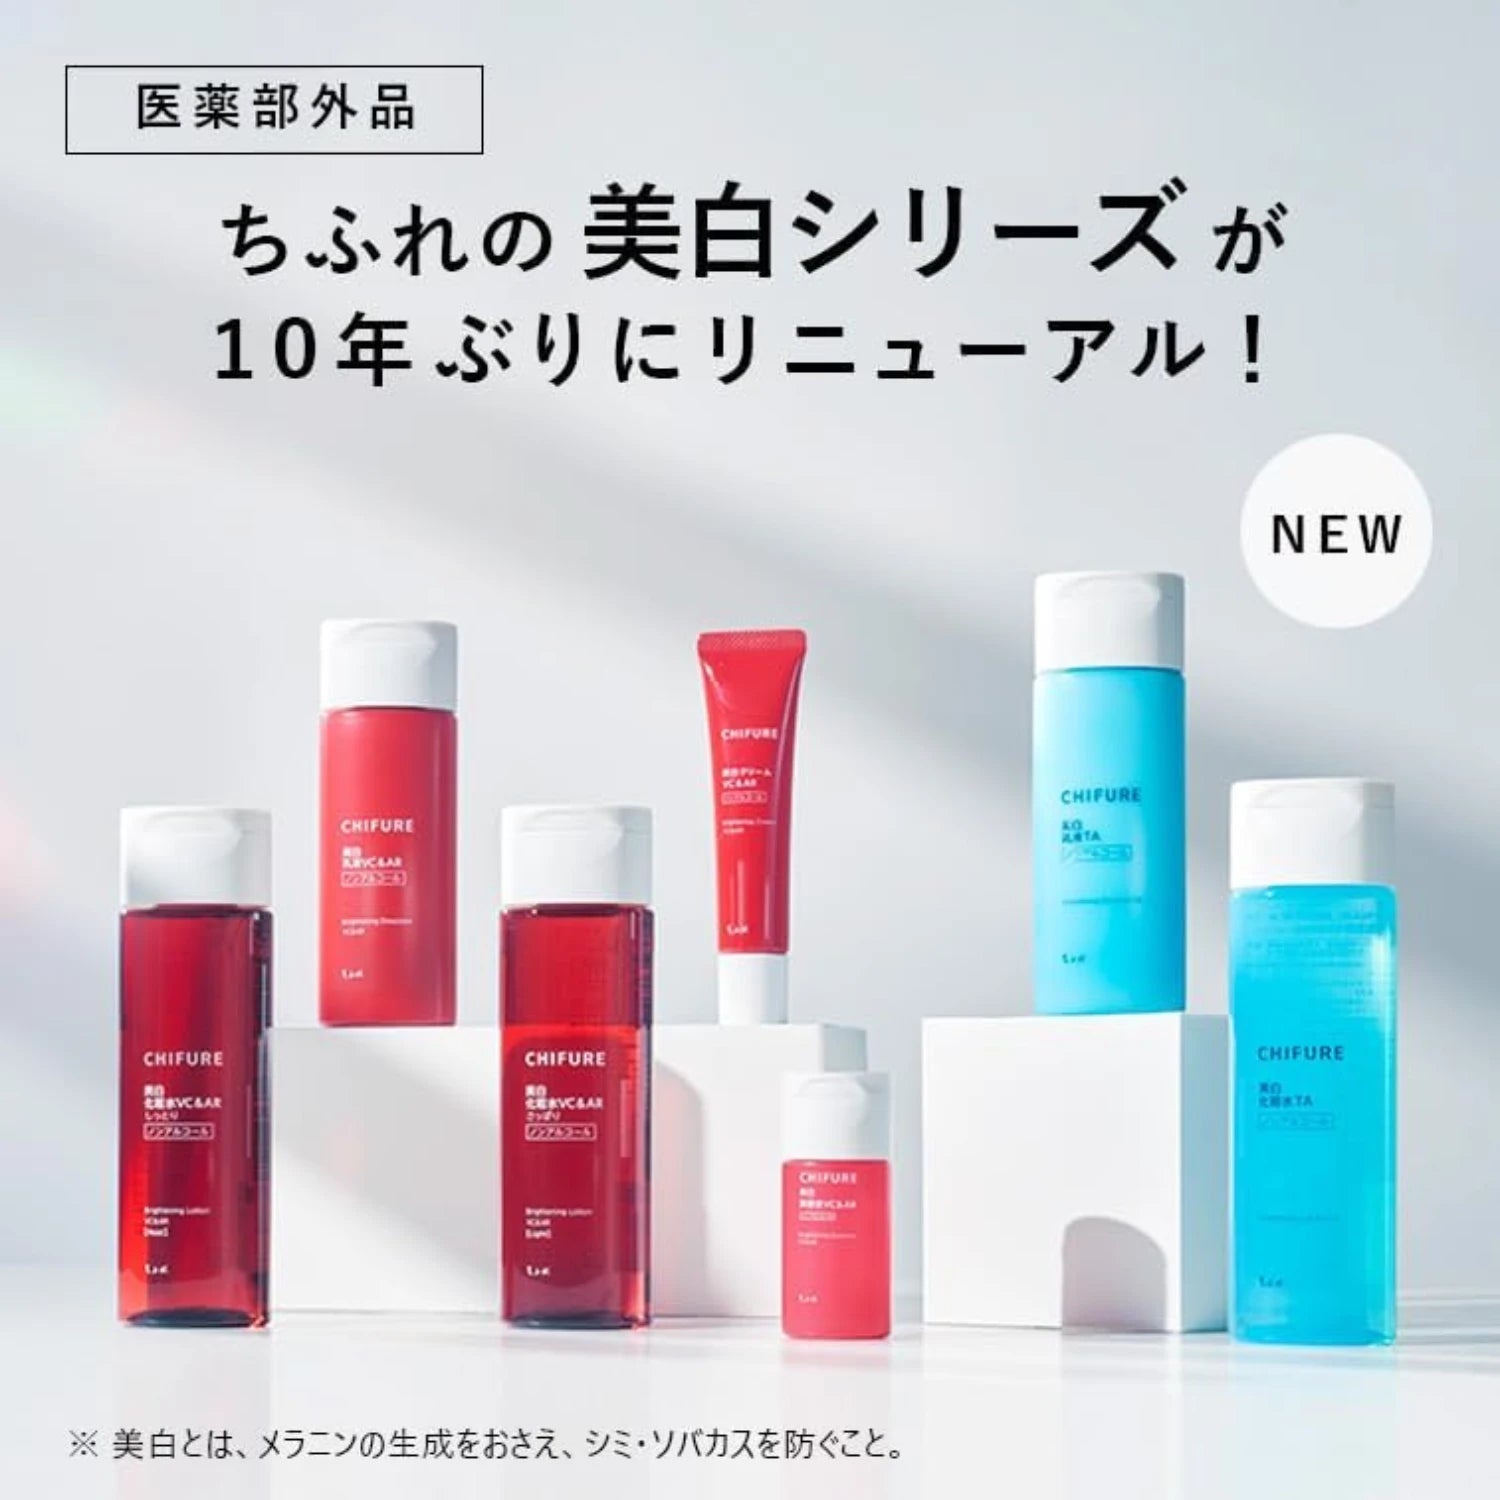 Chifure Brightening Milky Lotion Tranexamic Acid 150ml - Buy Me Japan